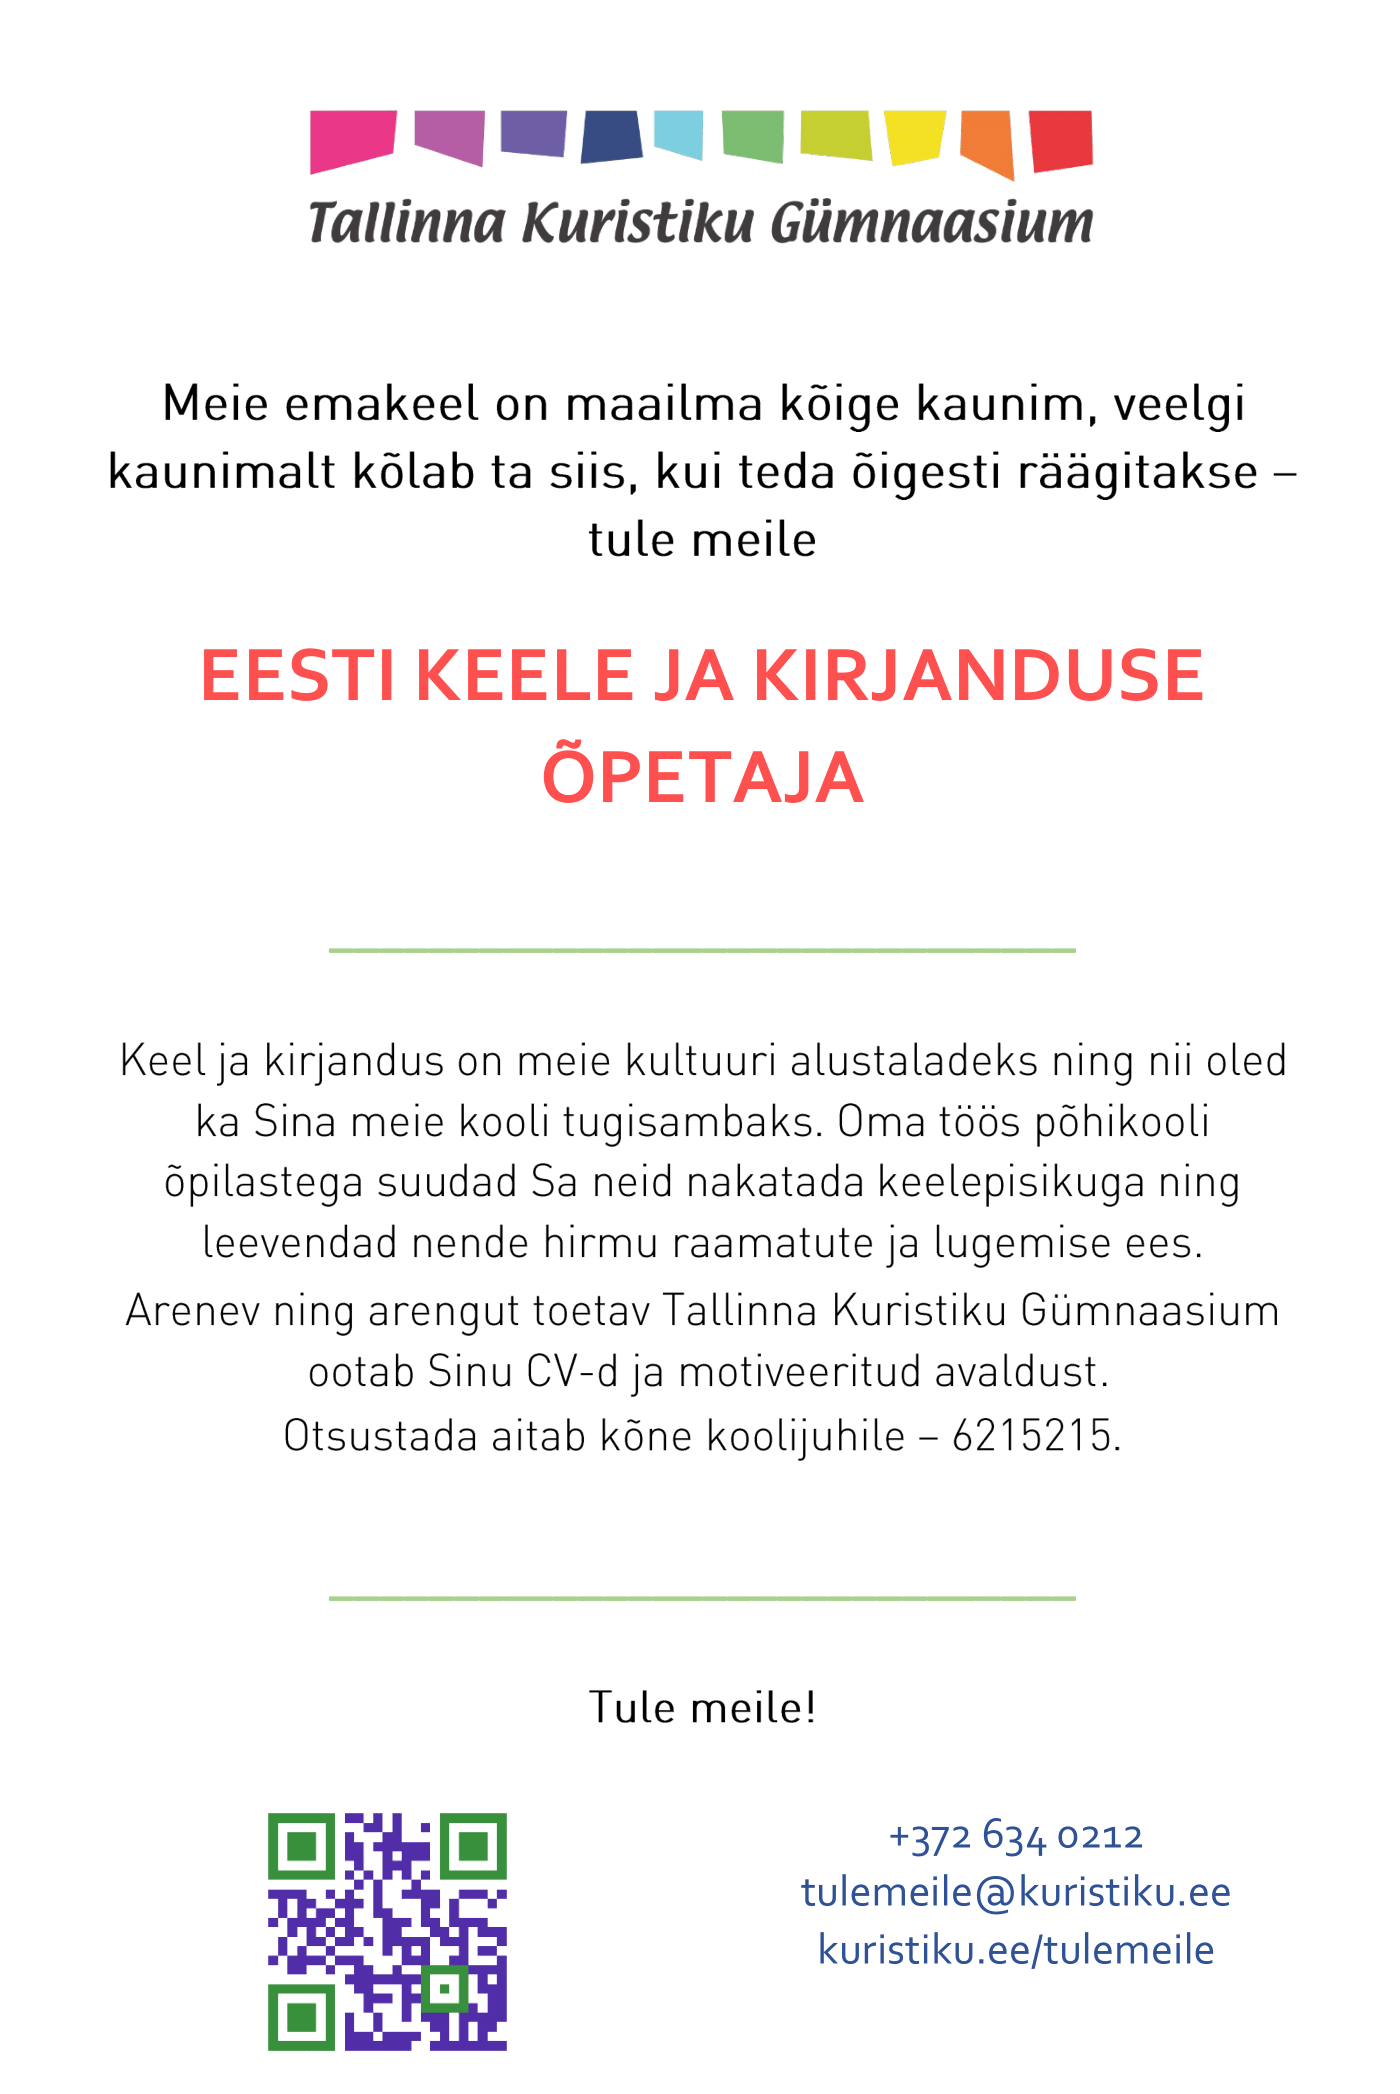 Eesti keel